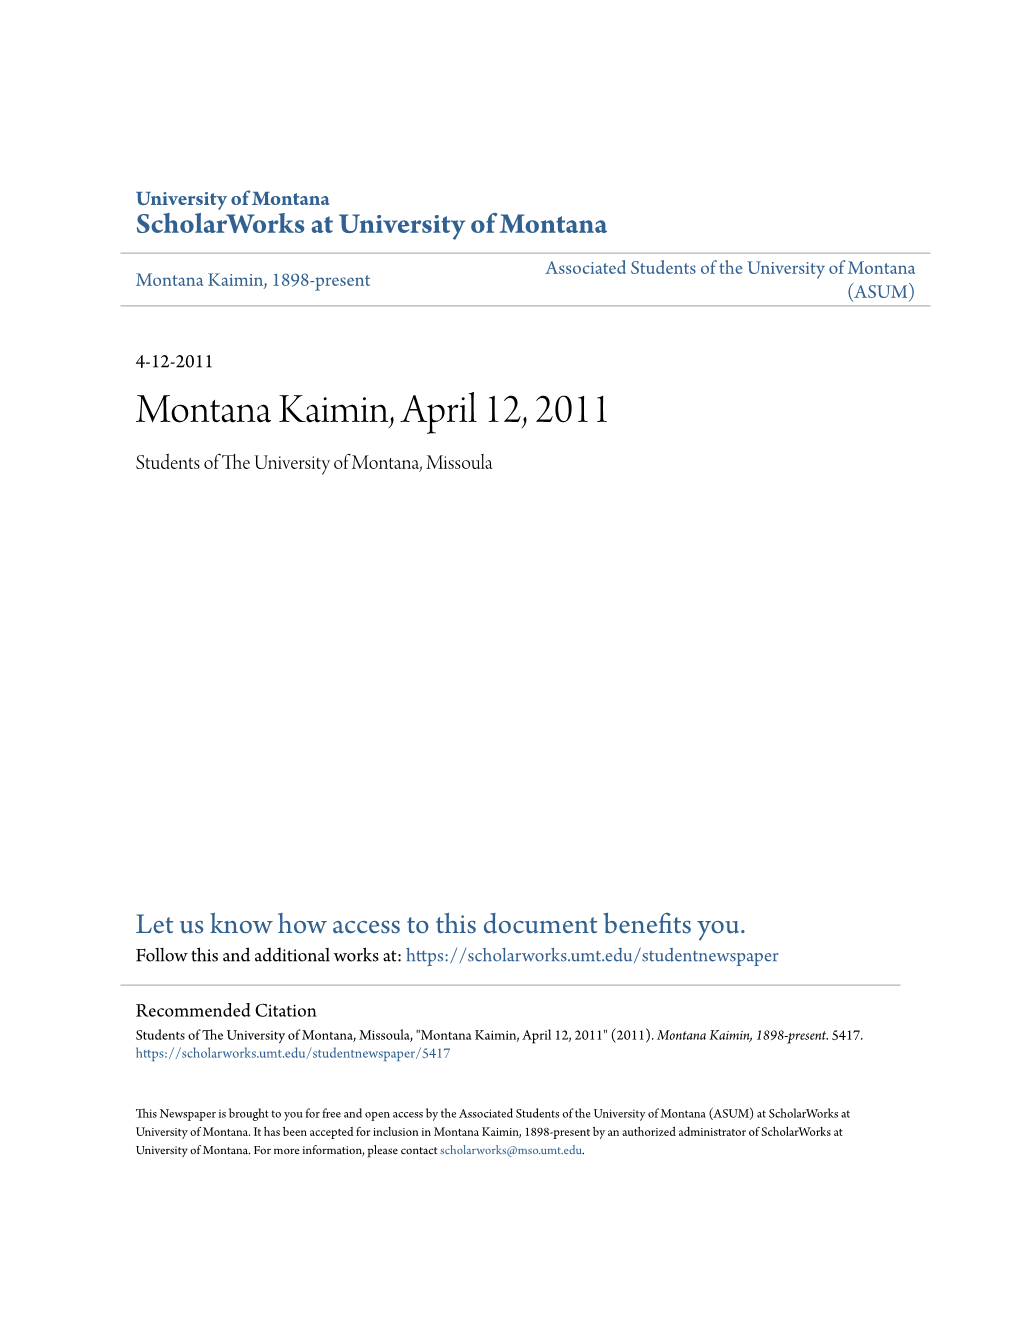 Montana Kaimin, April 12, 2011 Students of the Niu Versity of Montana, Missoula